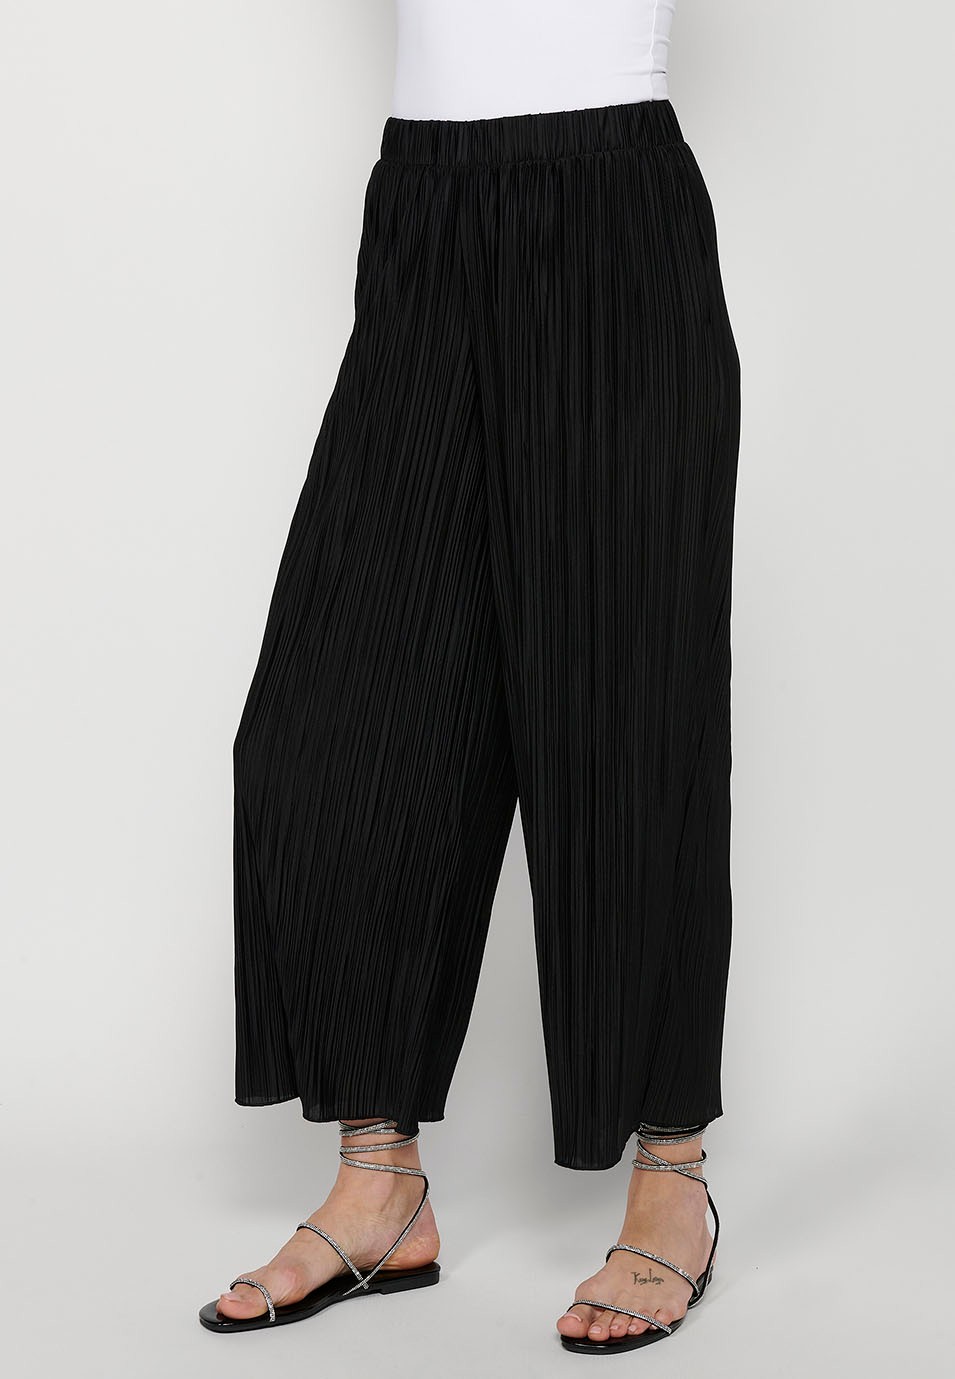 Lightweight long pants, rubberized waist, black pleated fabric for women